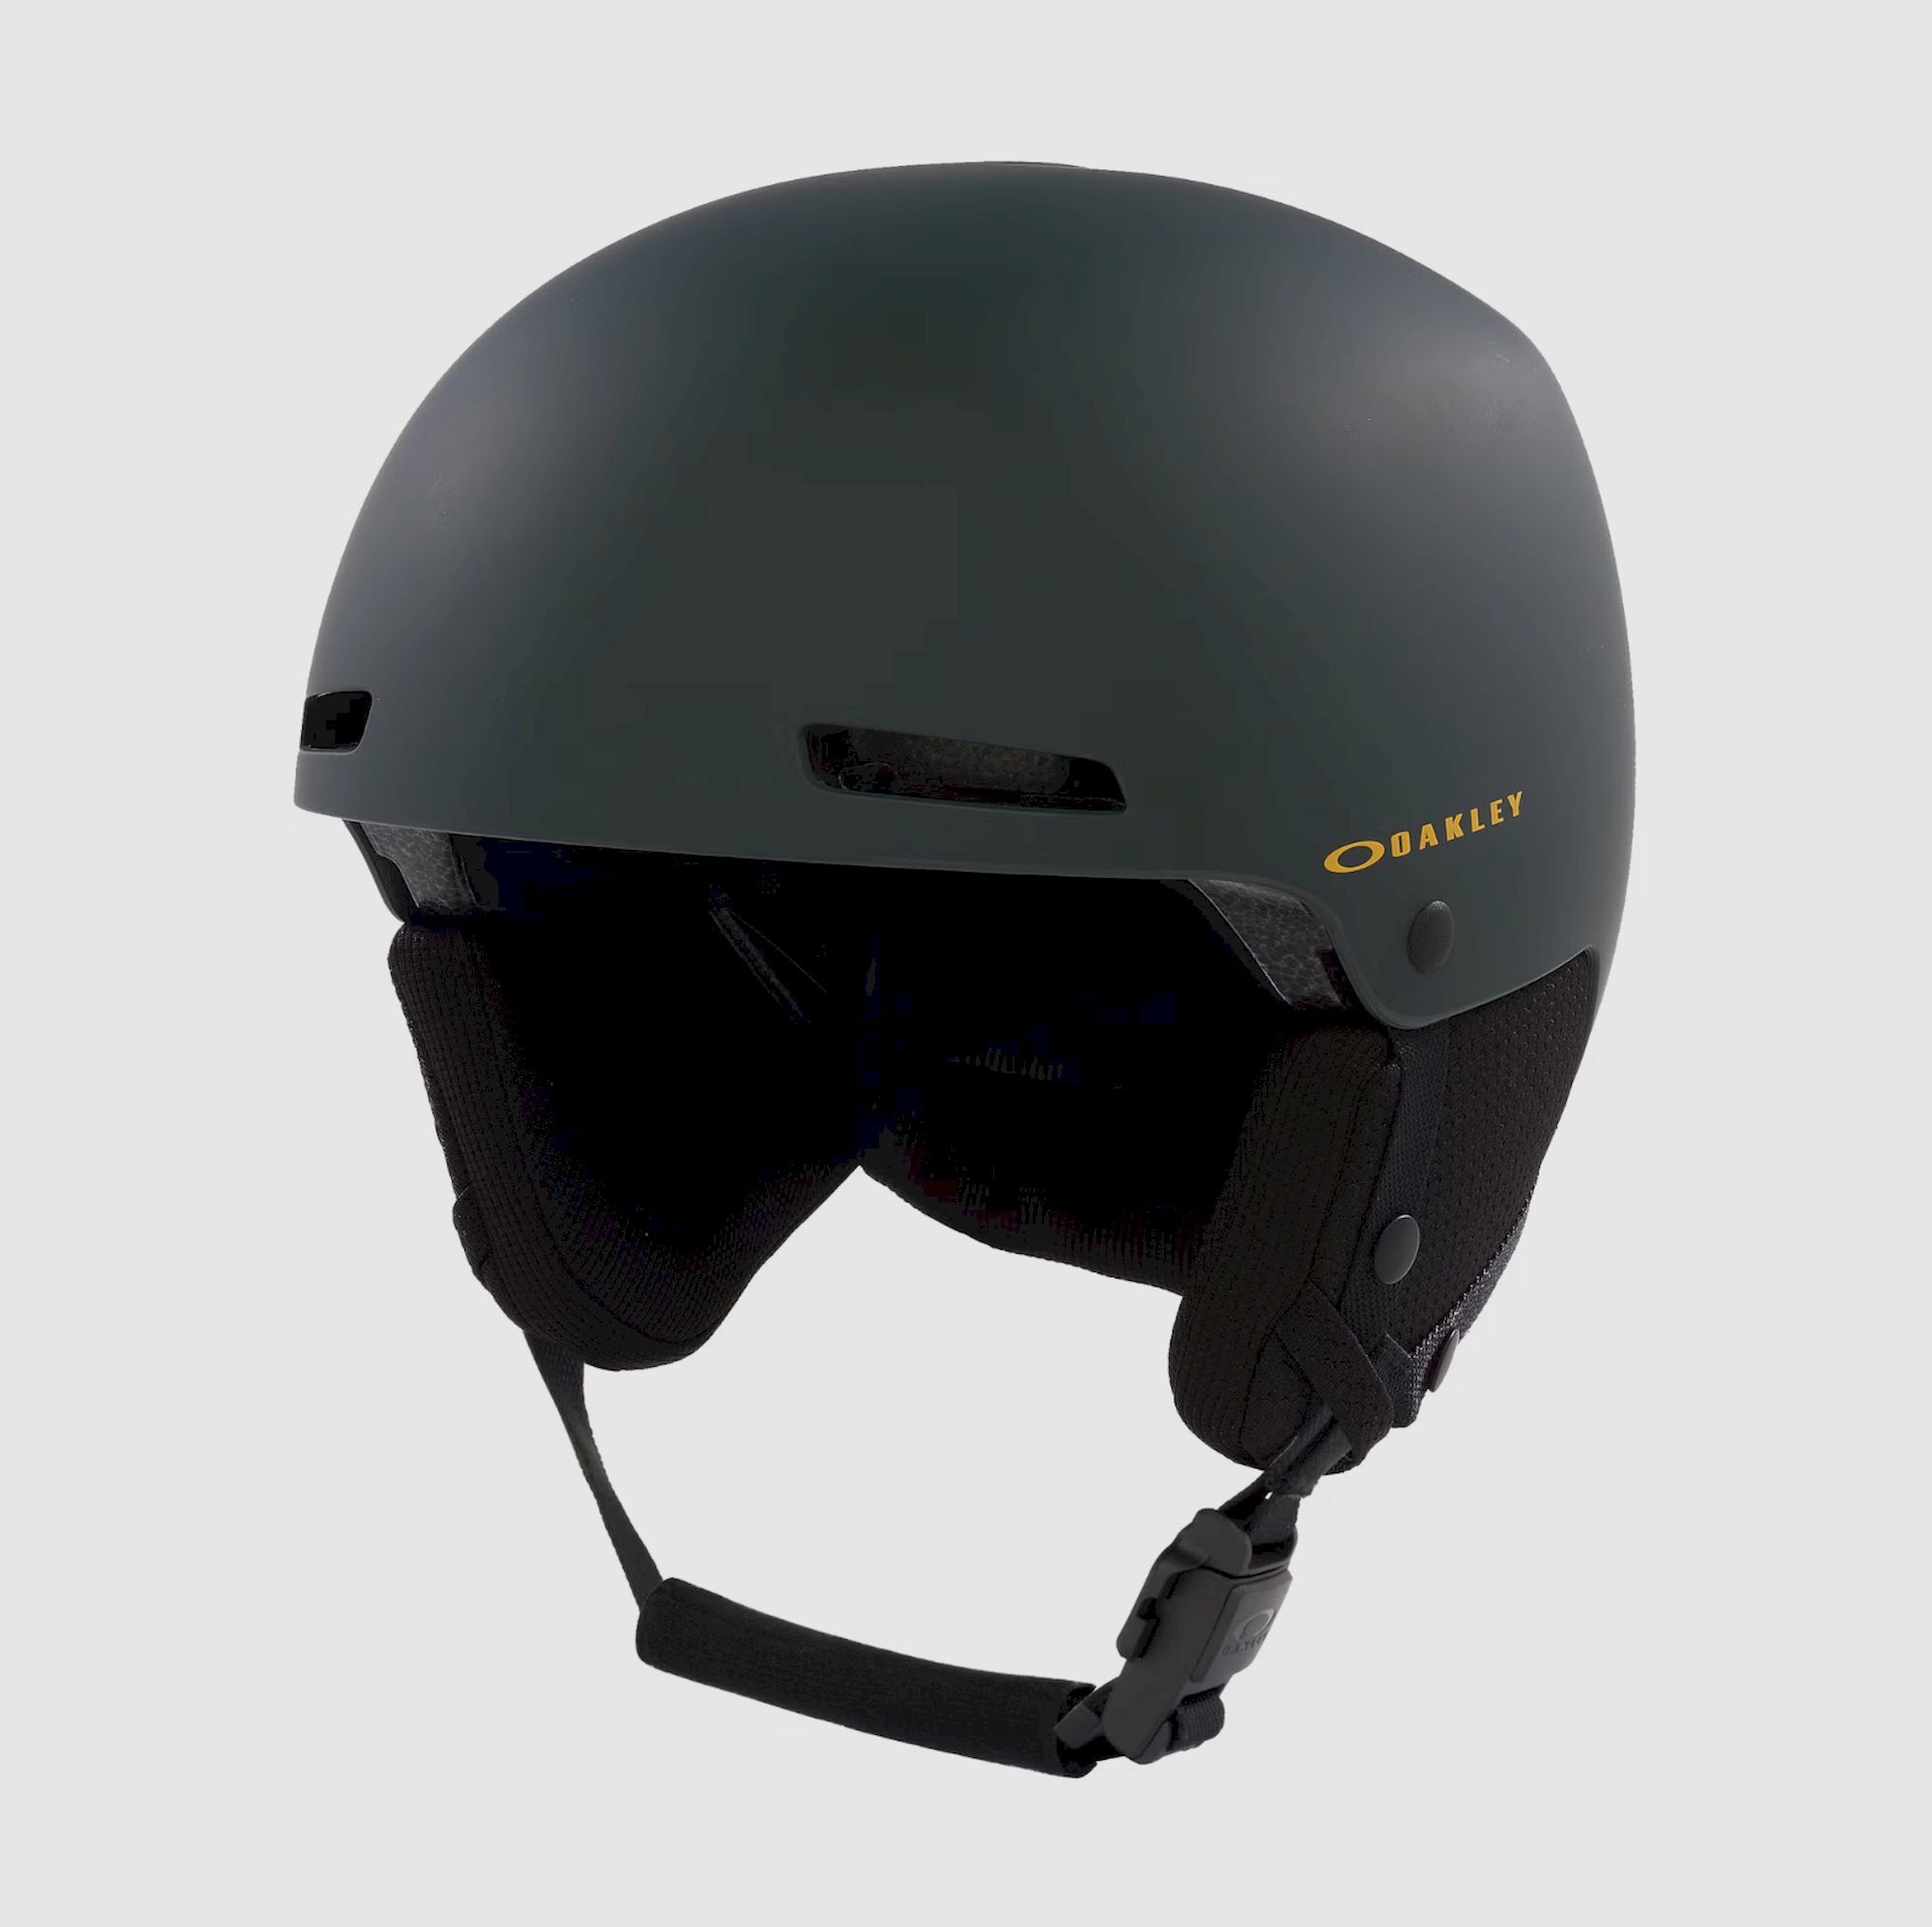 Oakley Mod1 Pro - Ski helmet - Men's